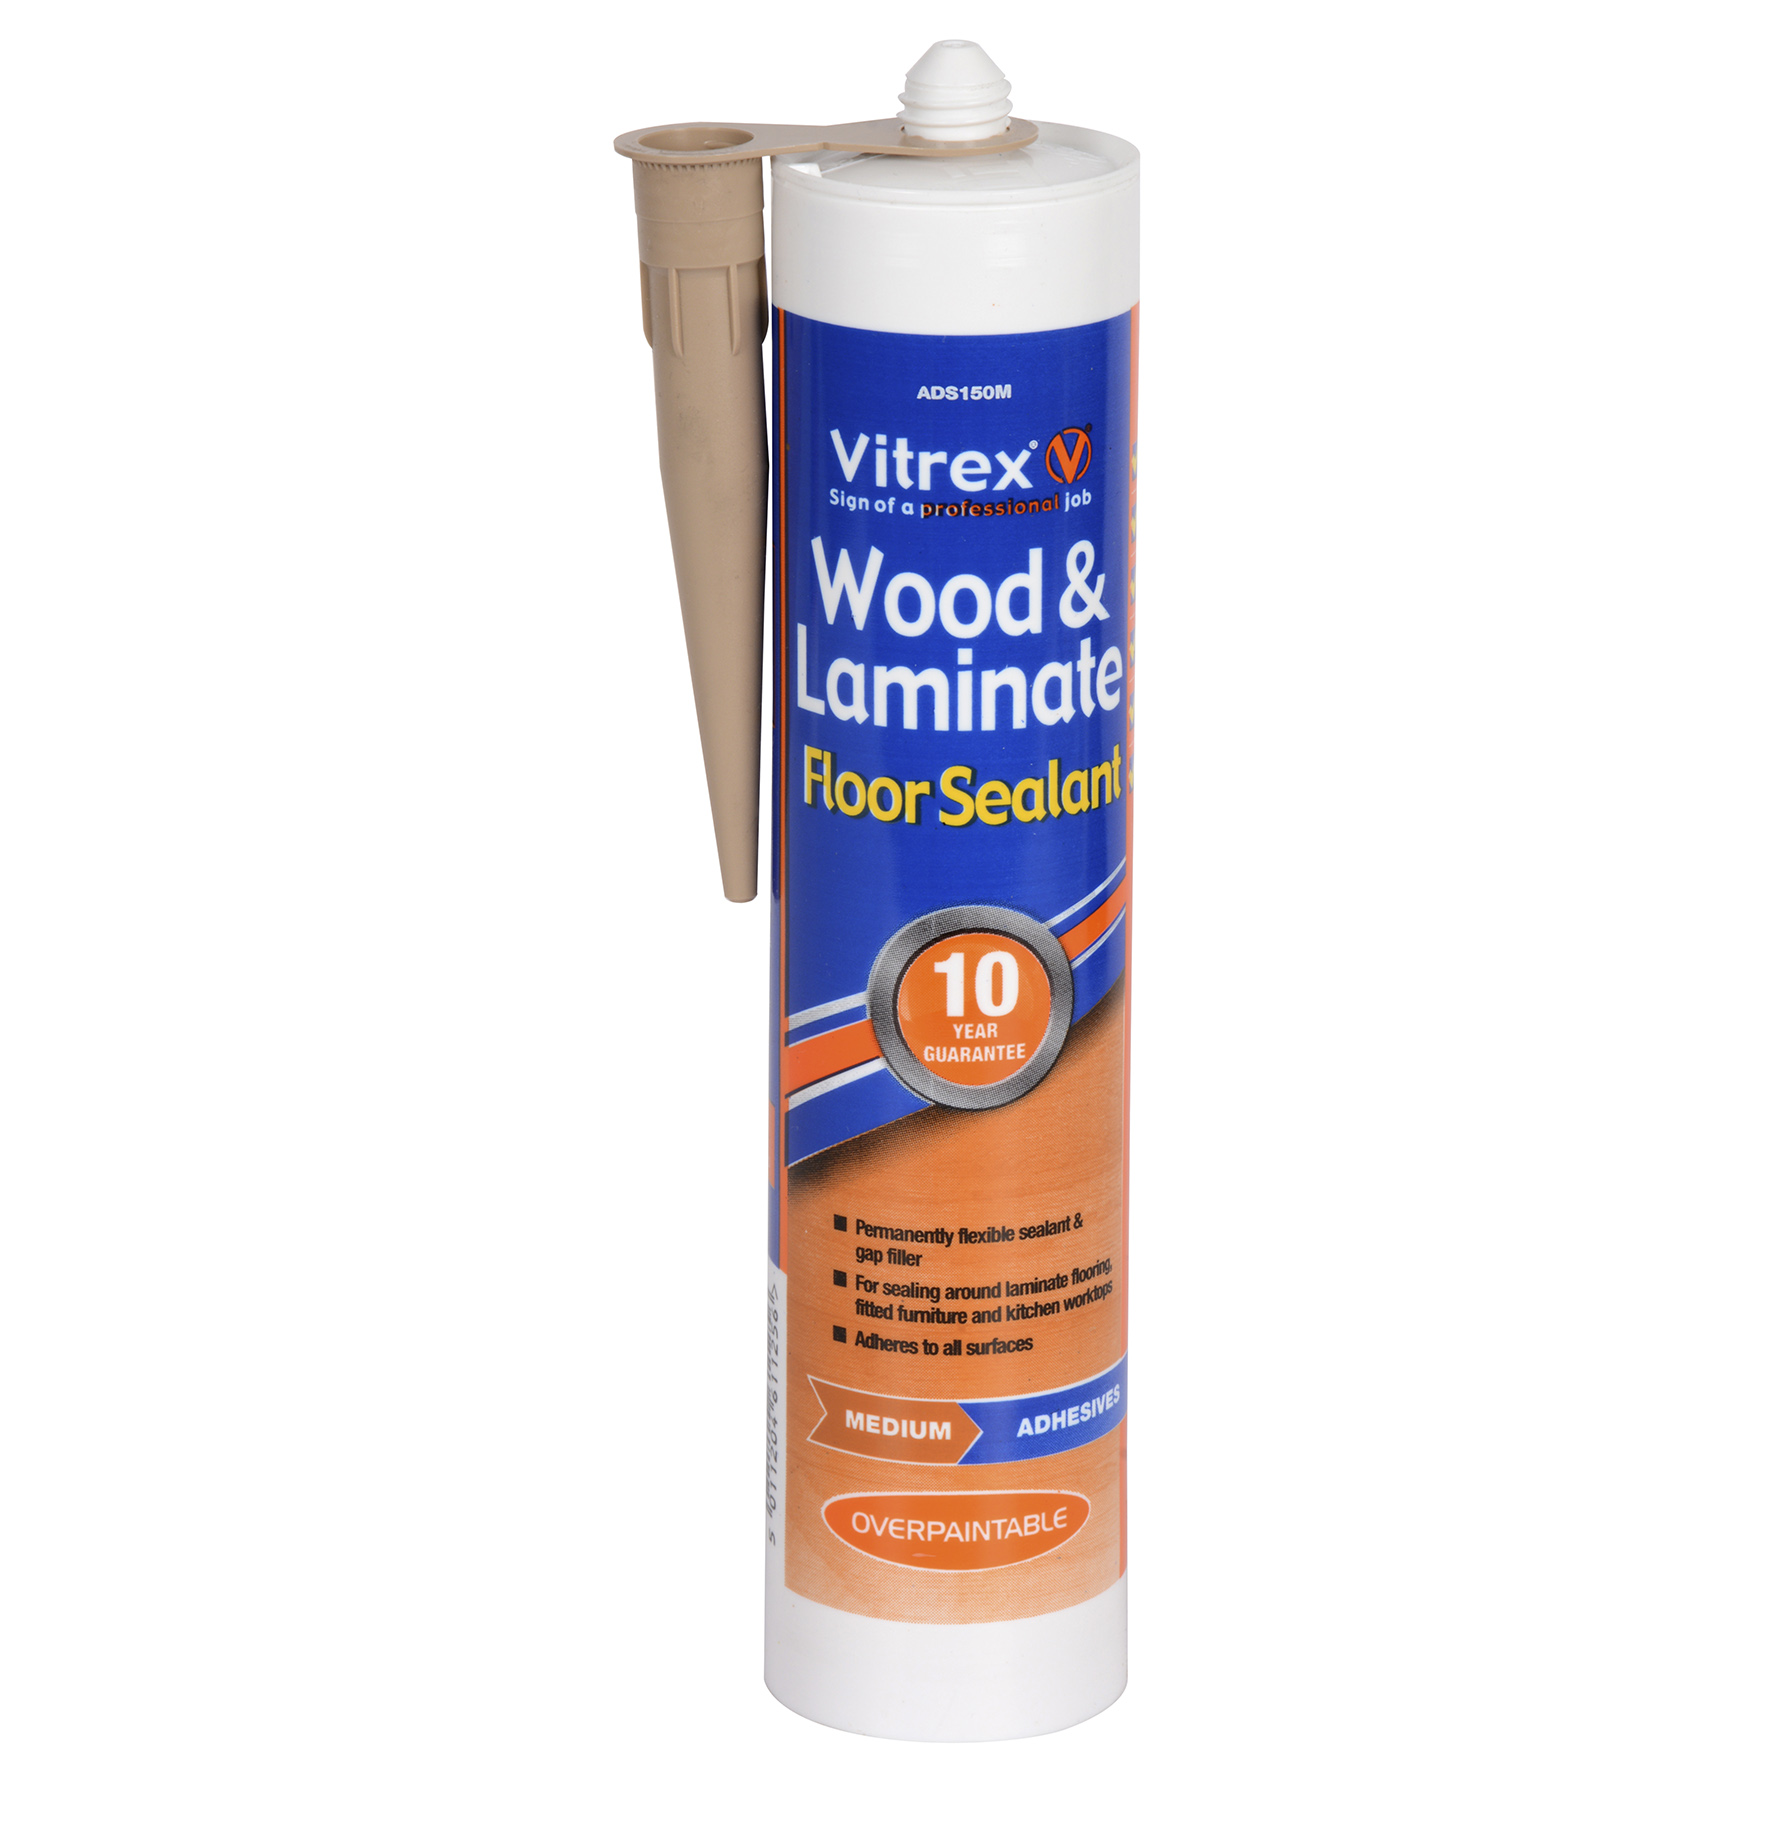 Wood & Laminate Floor Sealant - Medium